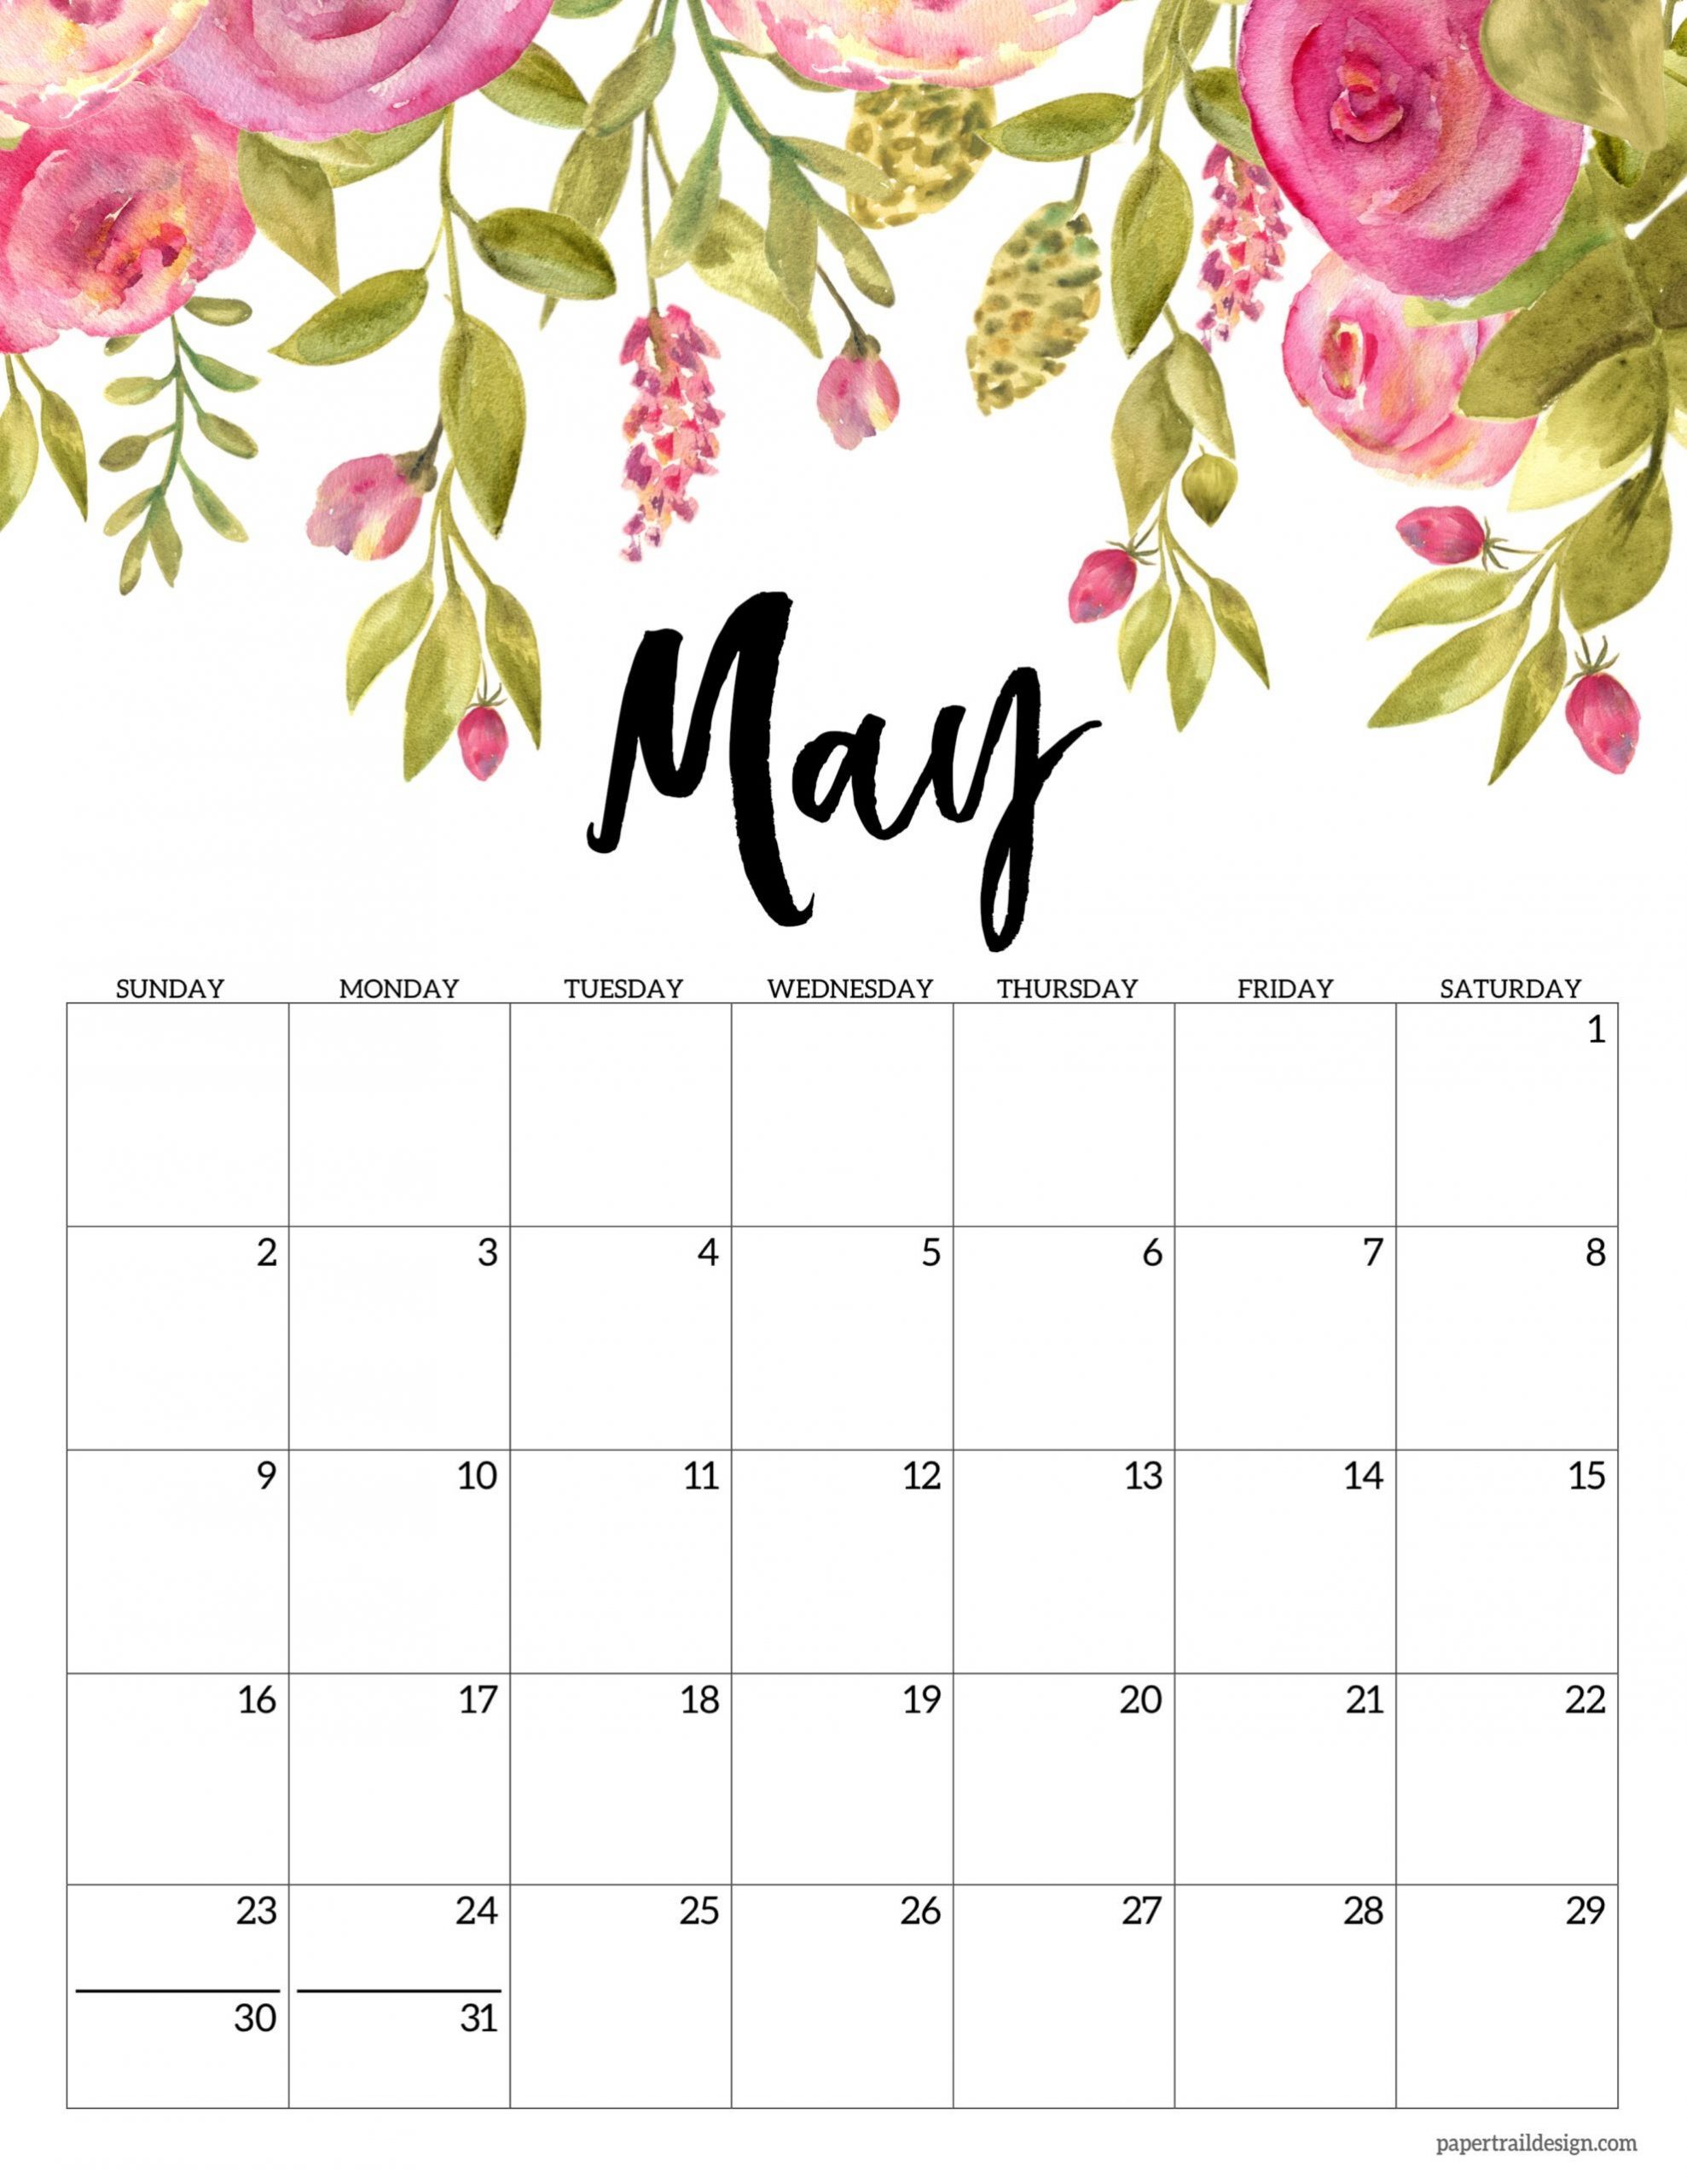 Free Printable 2021 Floral Calendar | Paper Trail Design